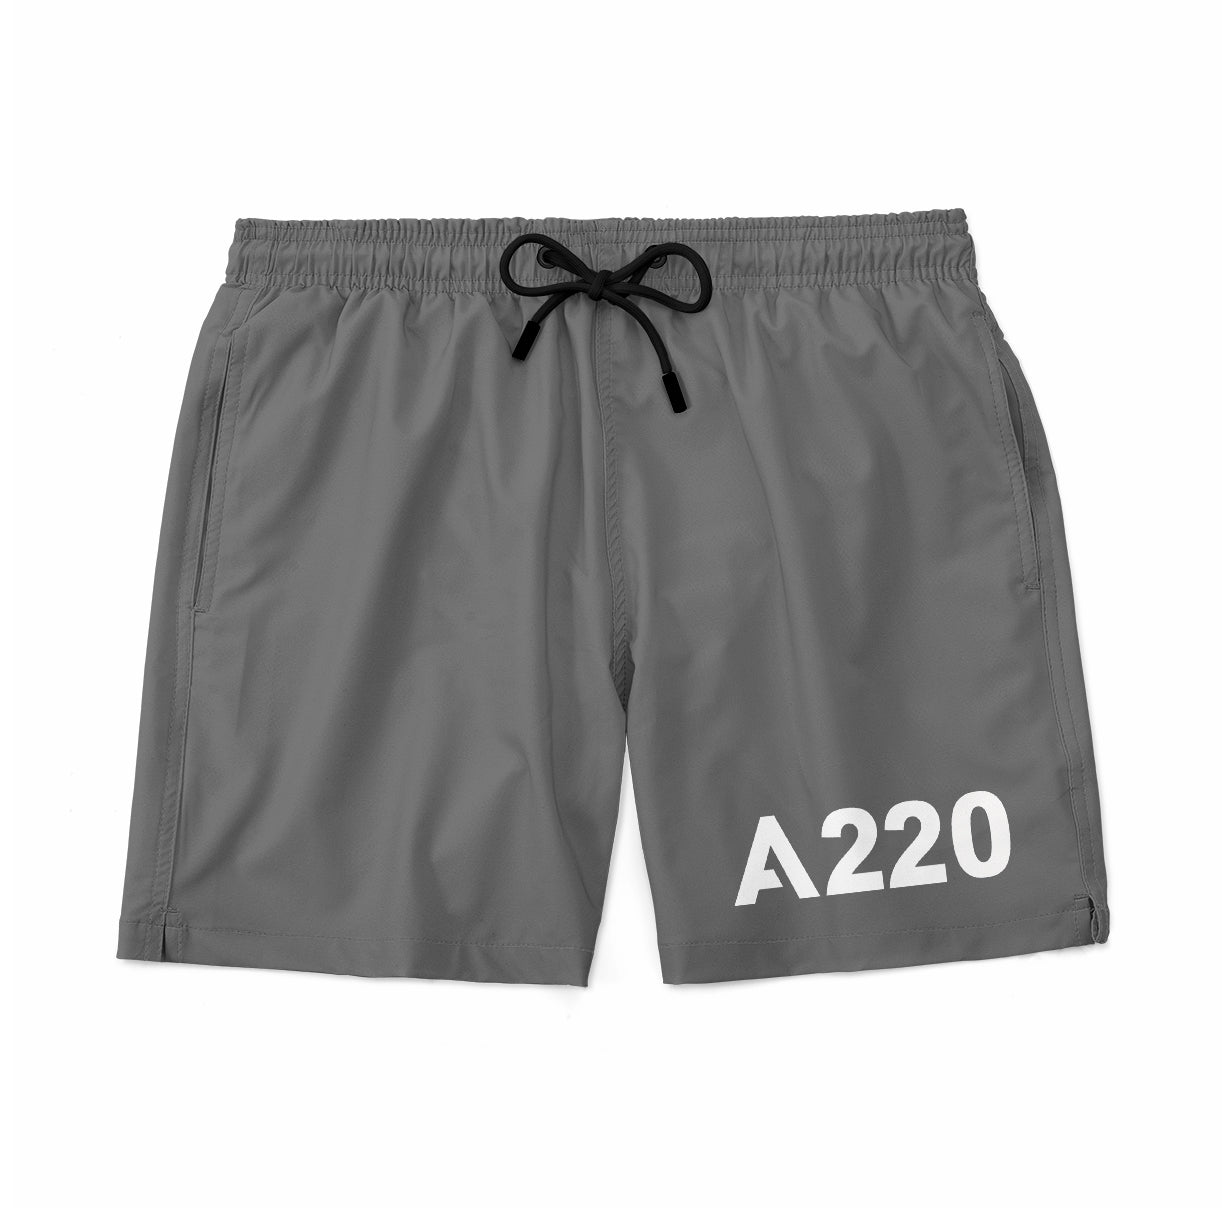 A220 Flat Text Designed Swim Trunks & Shorts